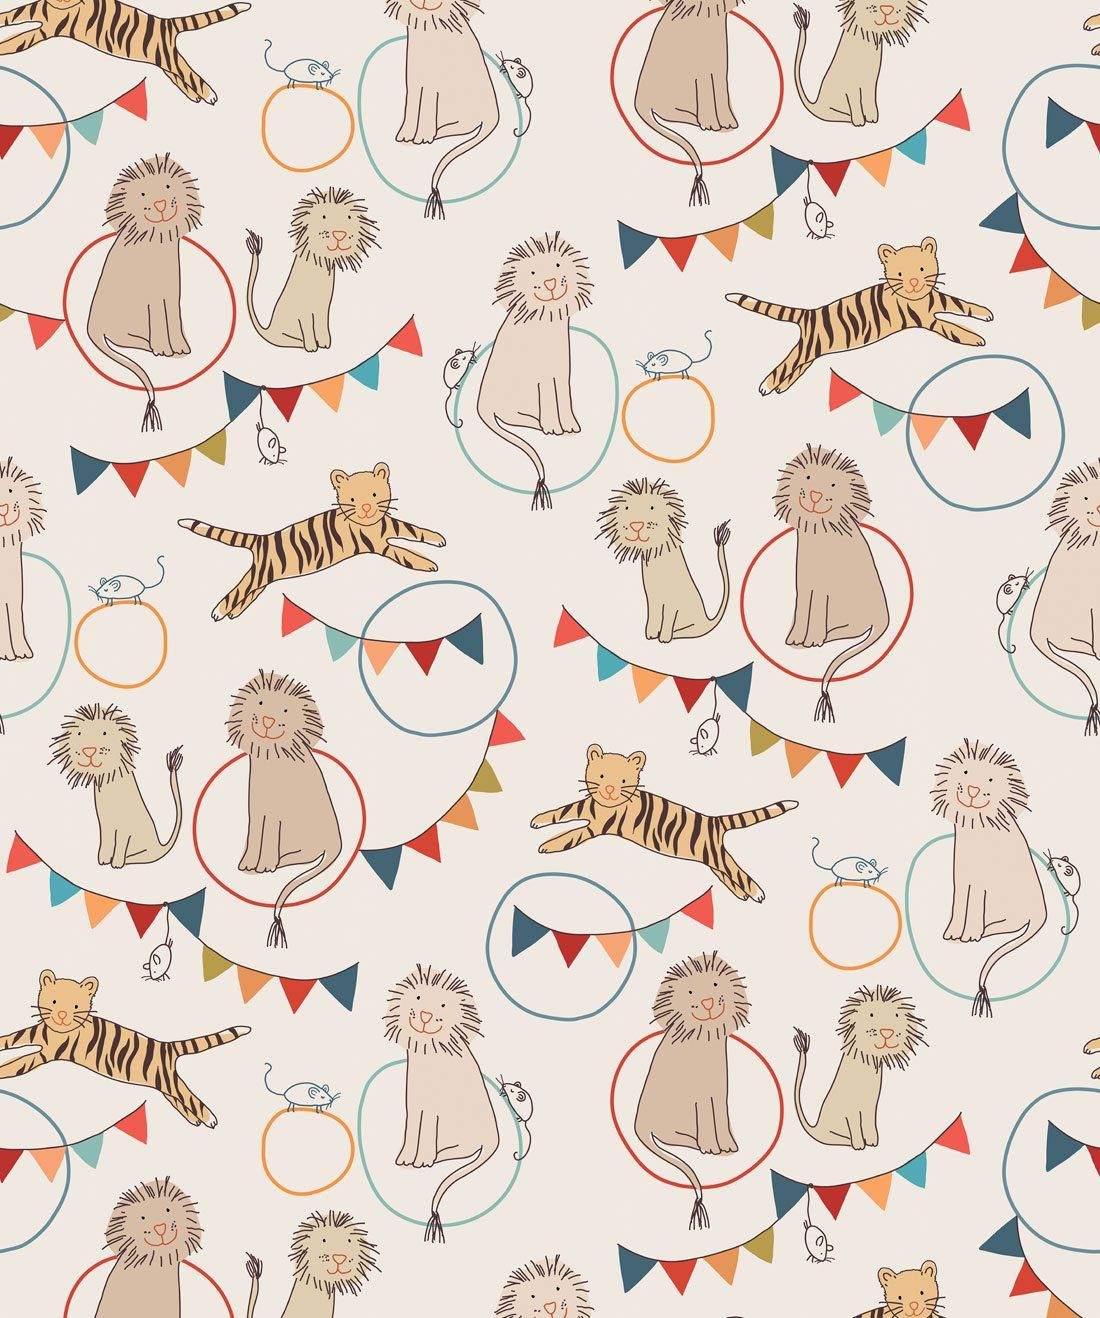 Lions & Tigers is a big cat kids Wallpaper